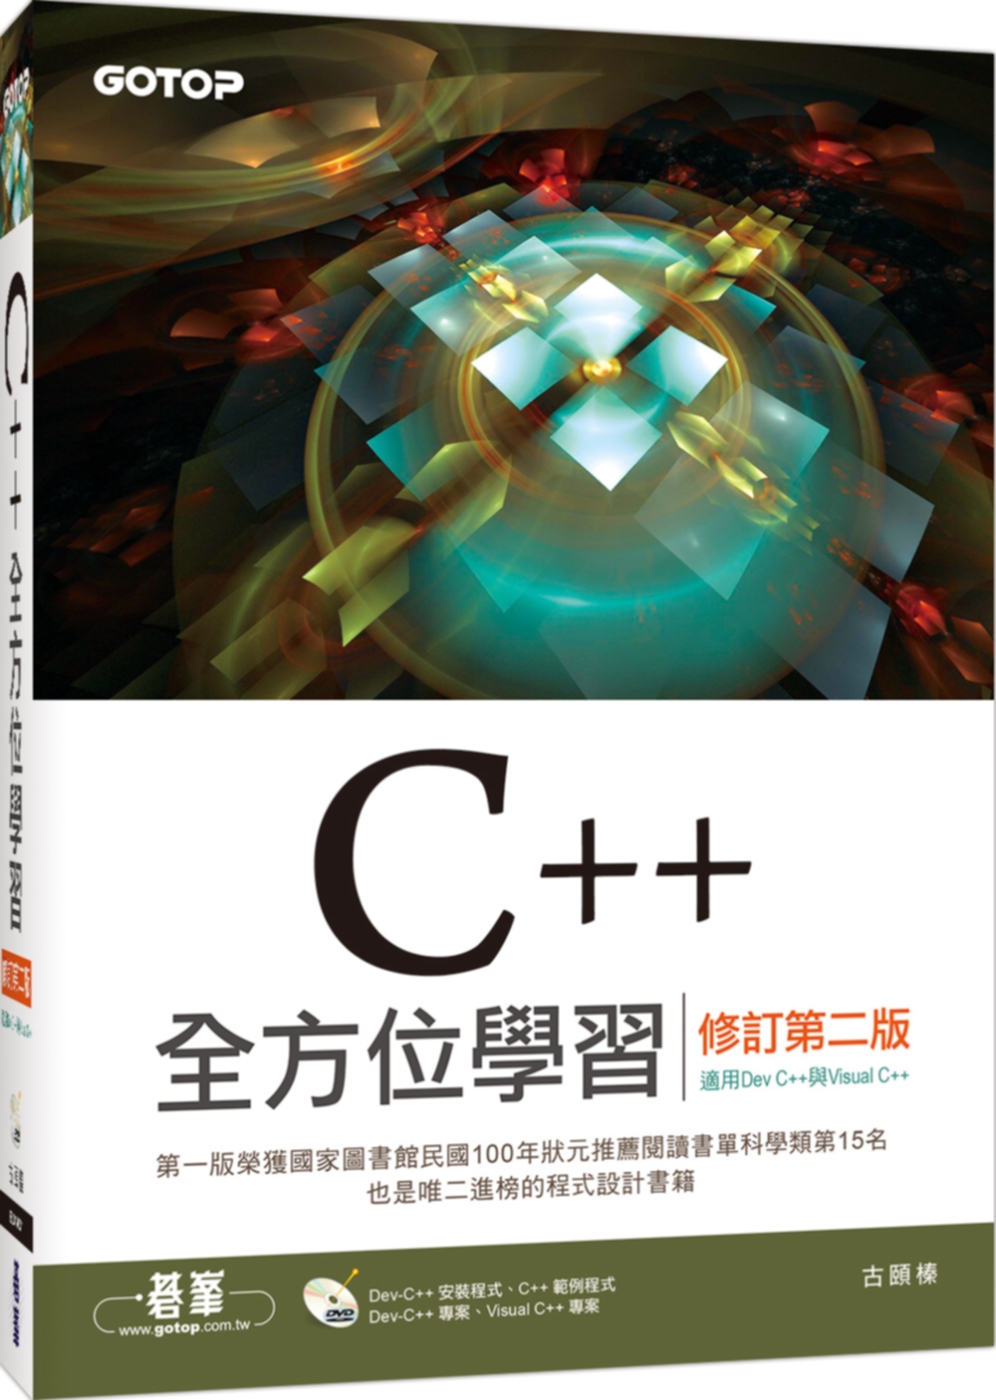 C++全方位學習(修訂第二版)(適用Dev C++與Visual C++)